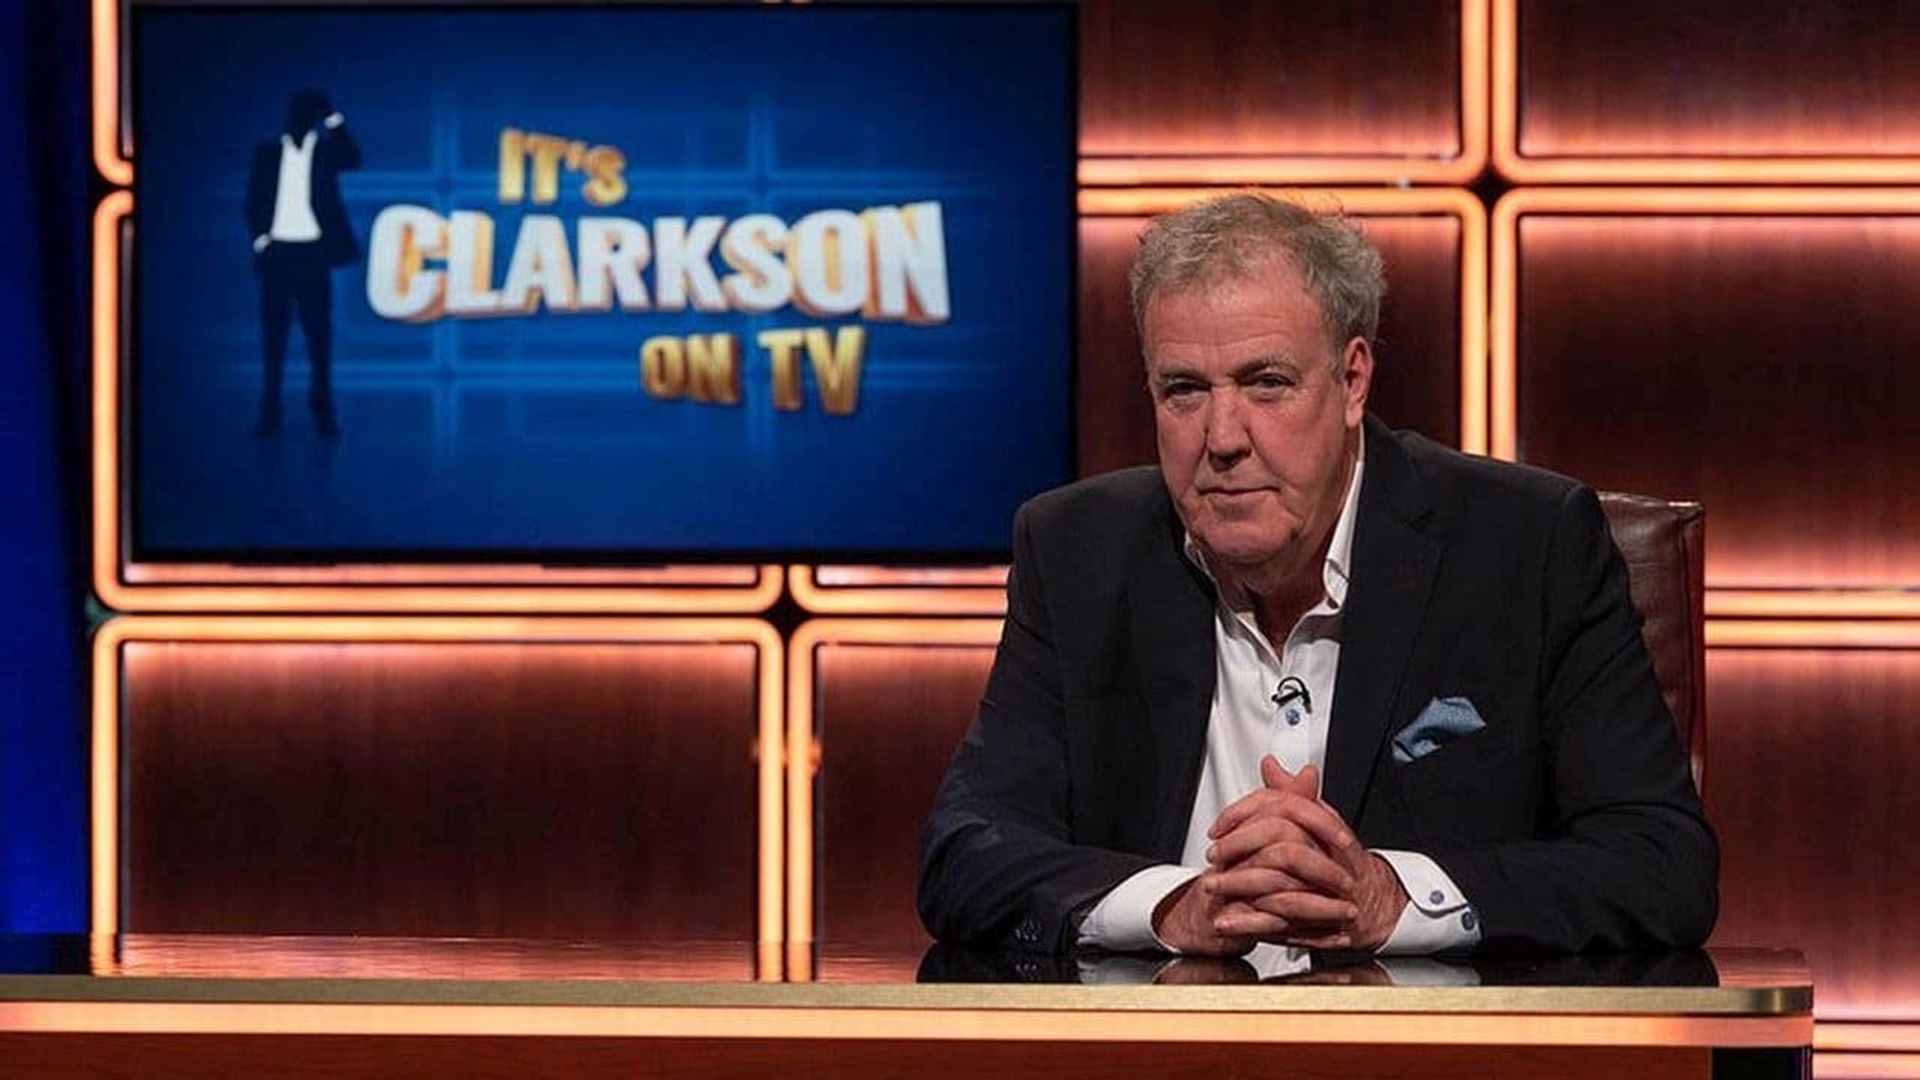 It's Clarkson on TV background